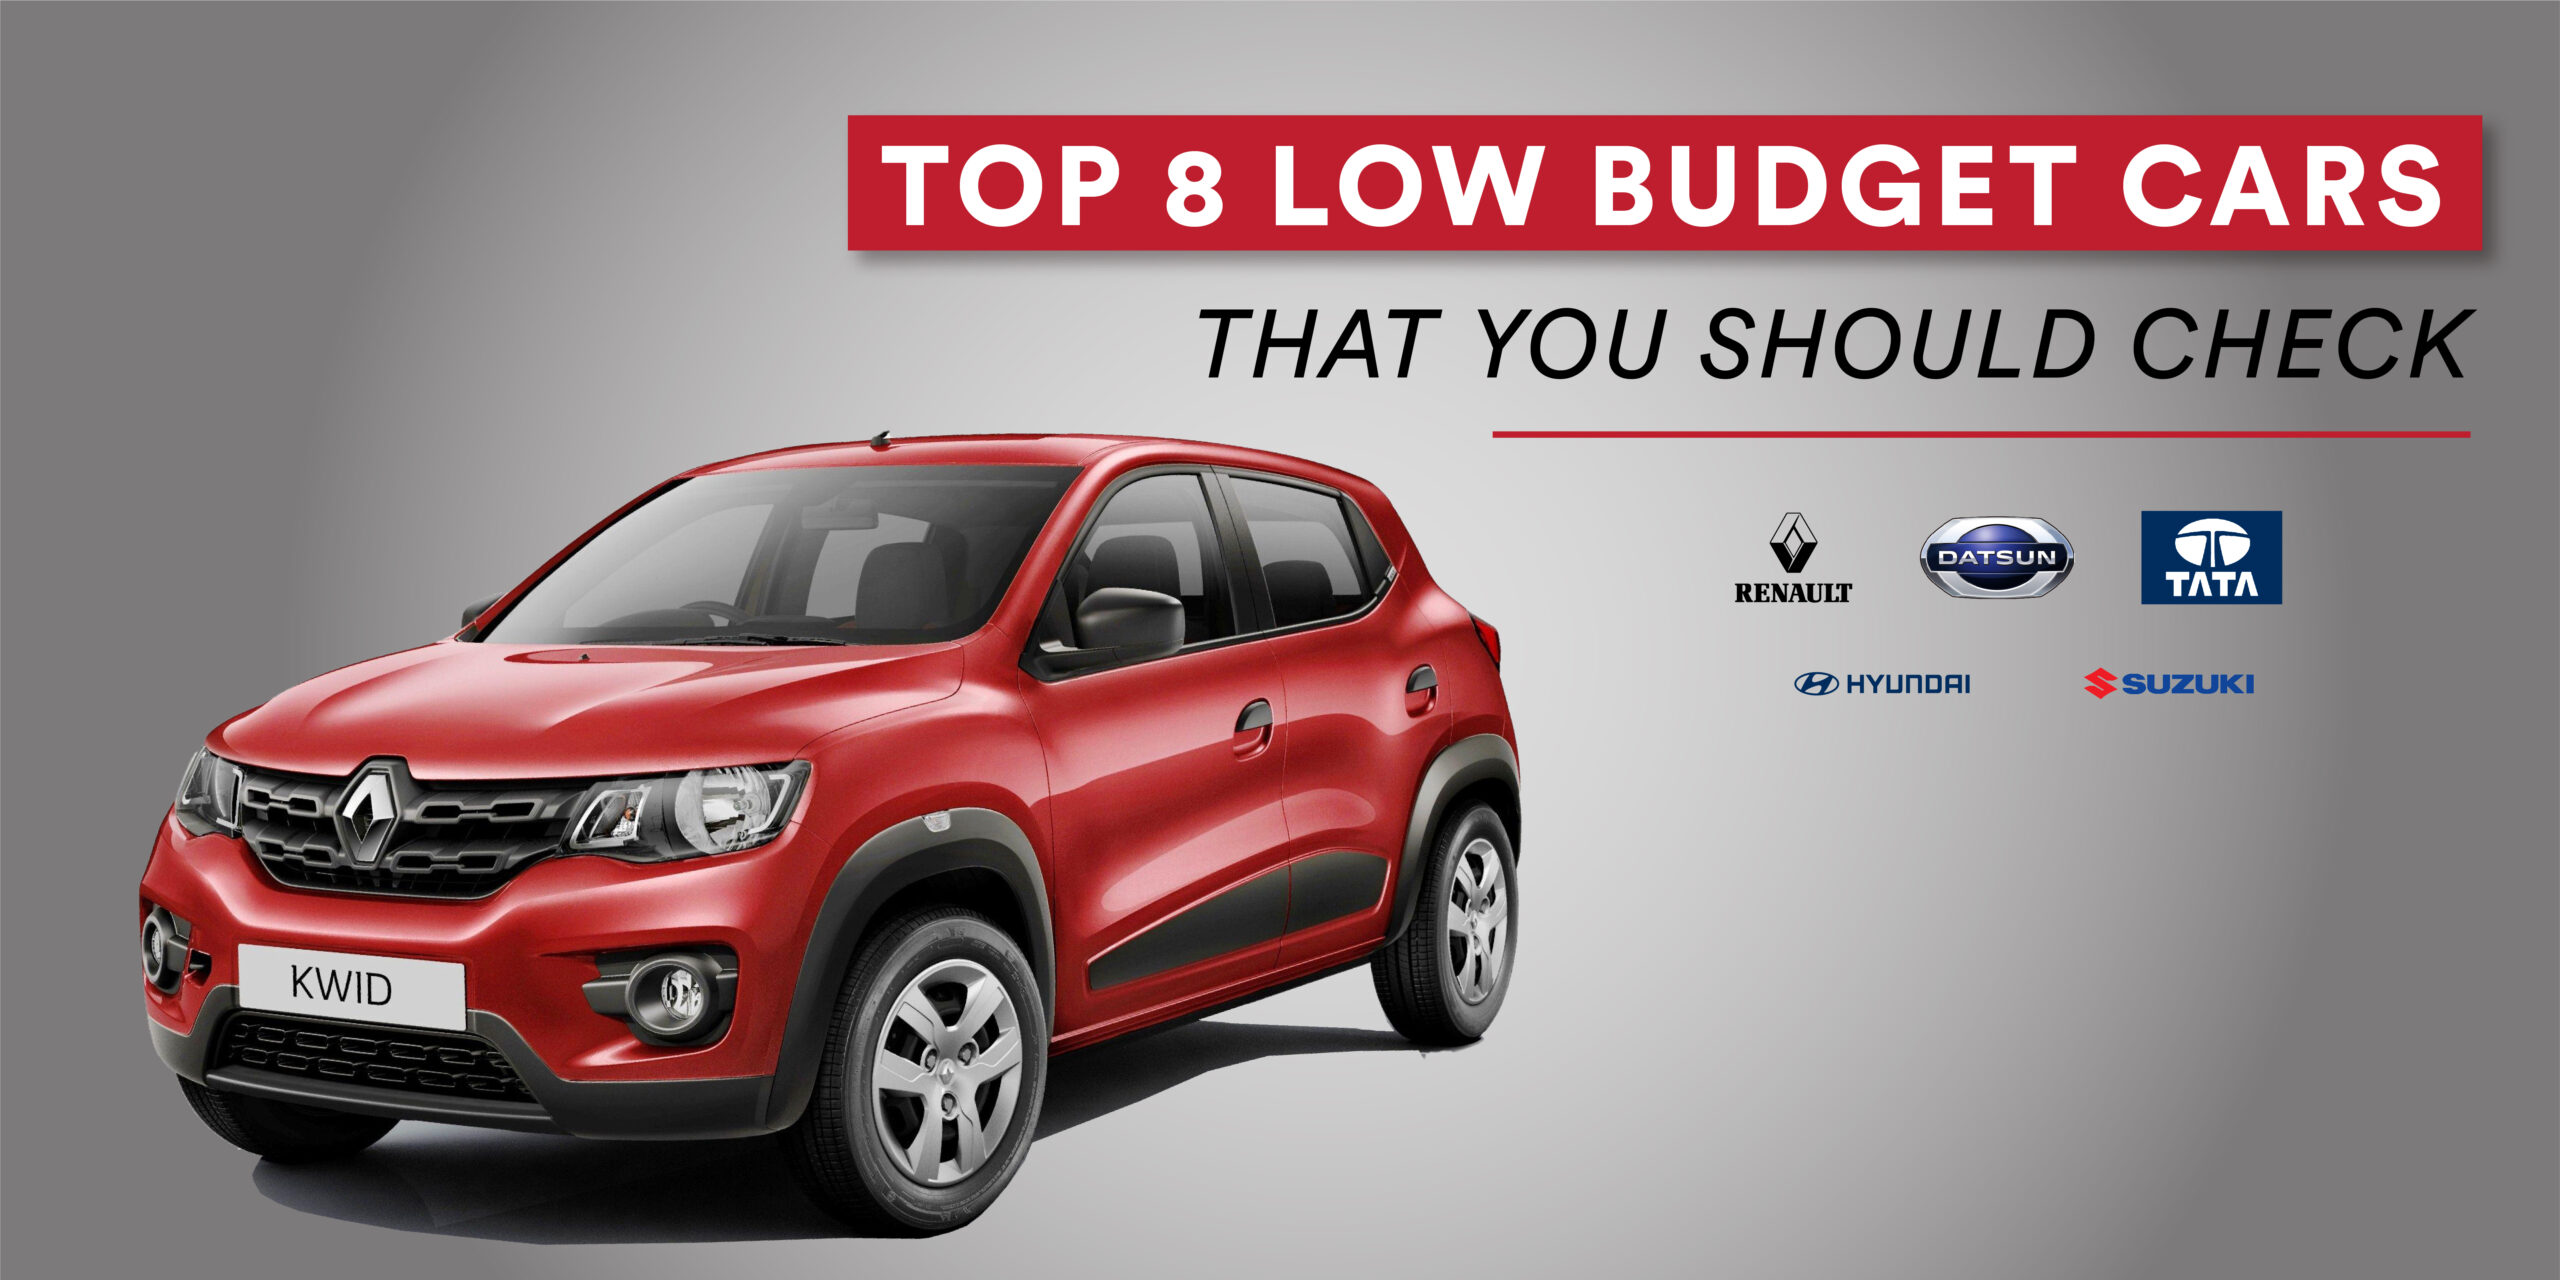 Best Low Budget Cars in India|Datsun Redi-Go|Redi go|Datsun Go+